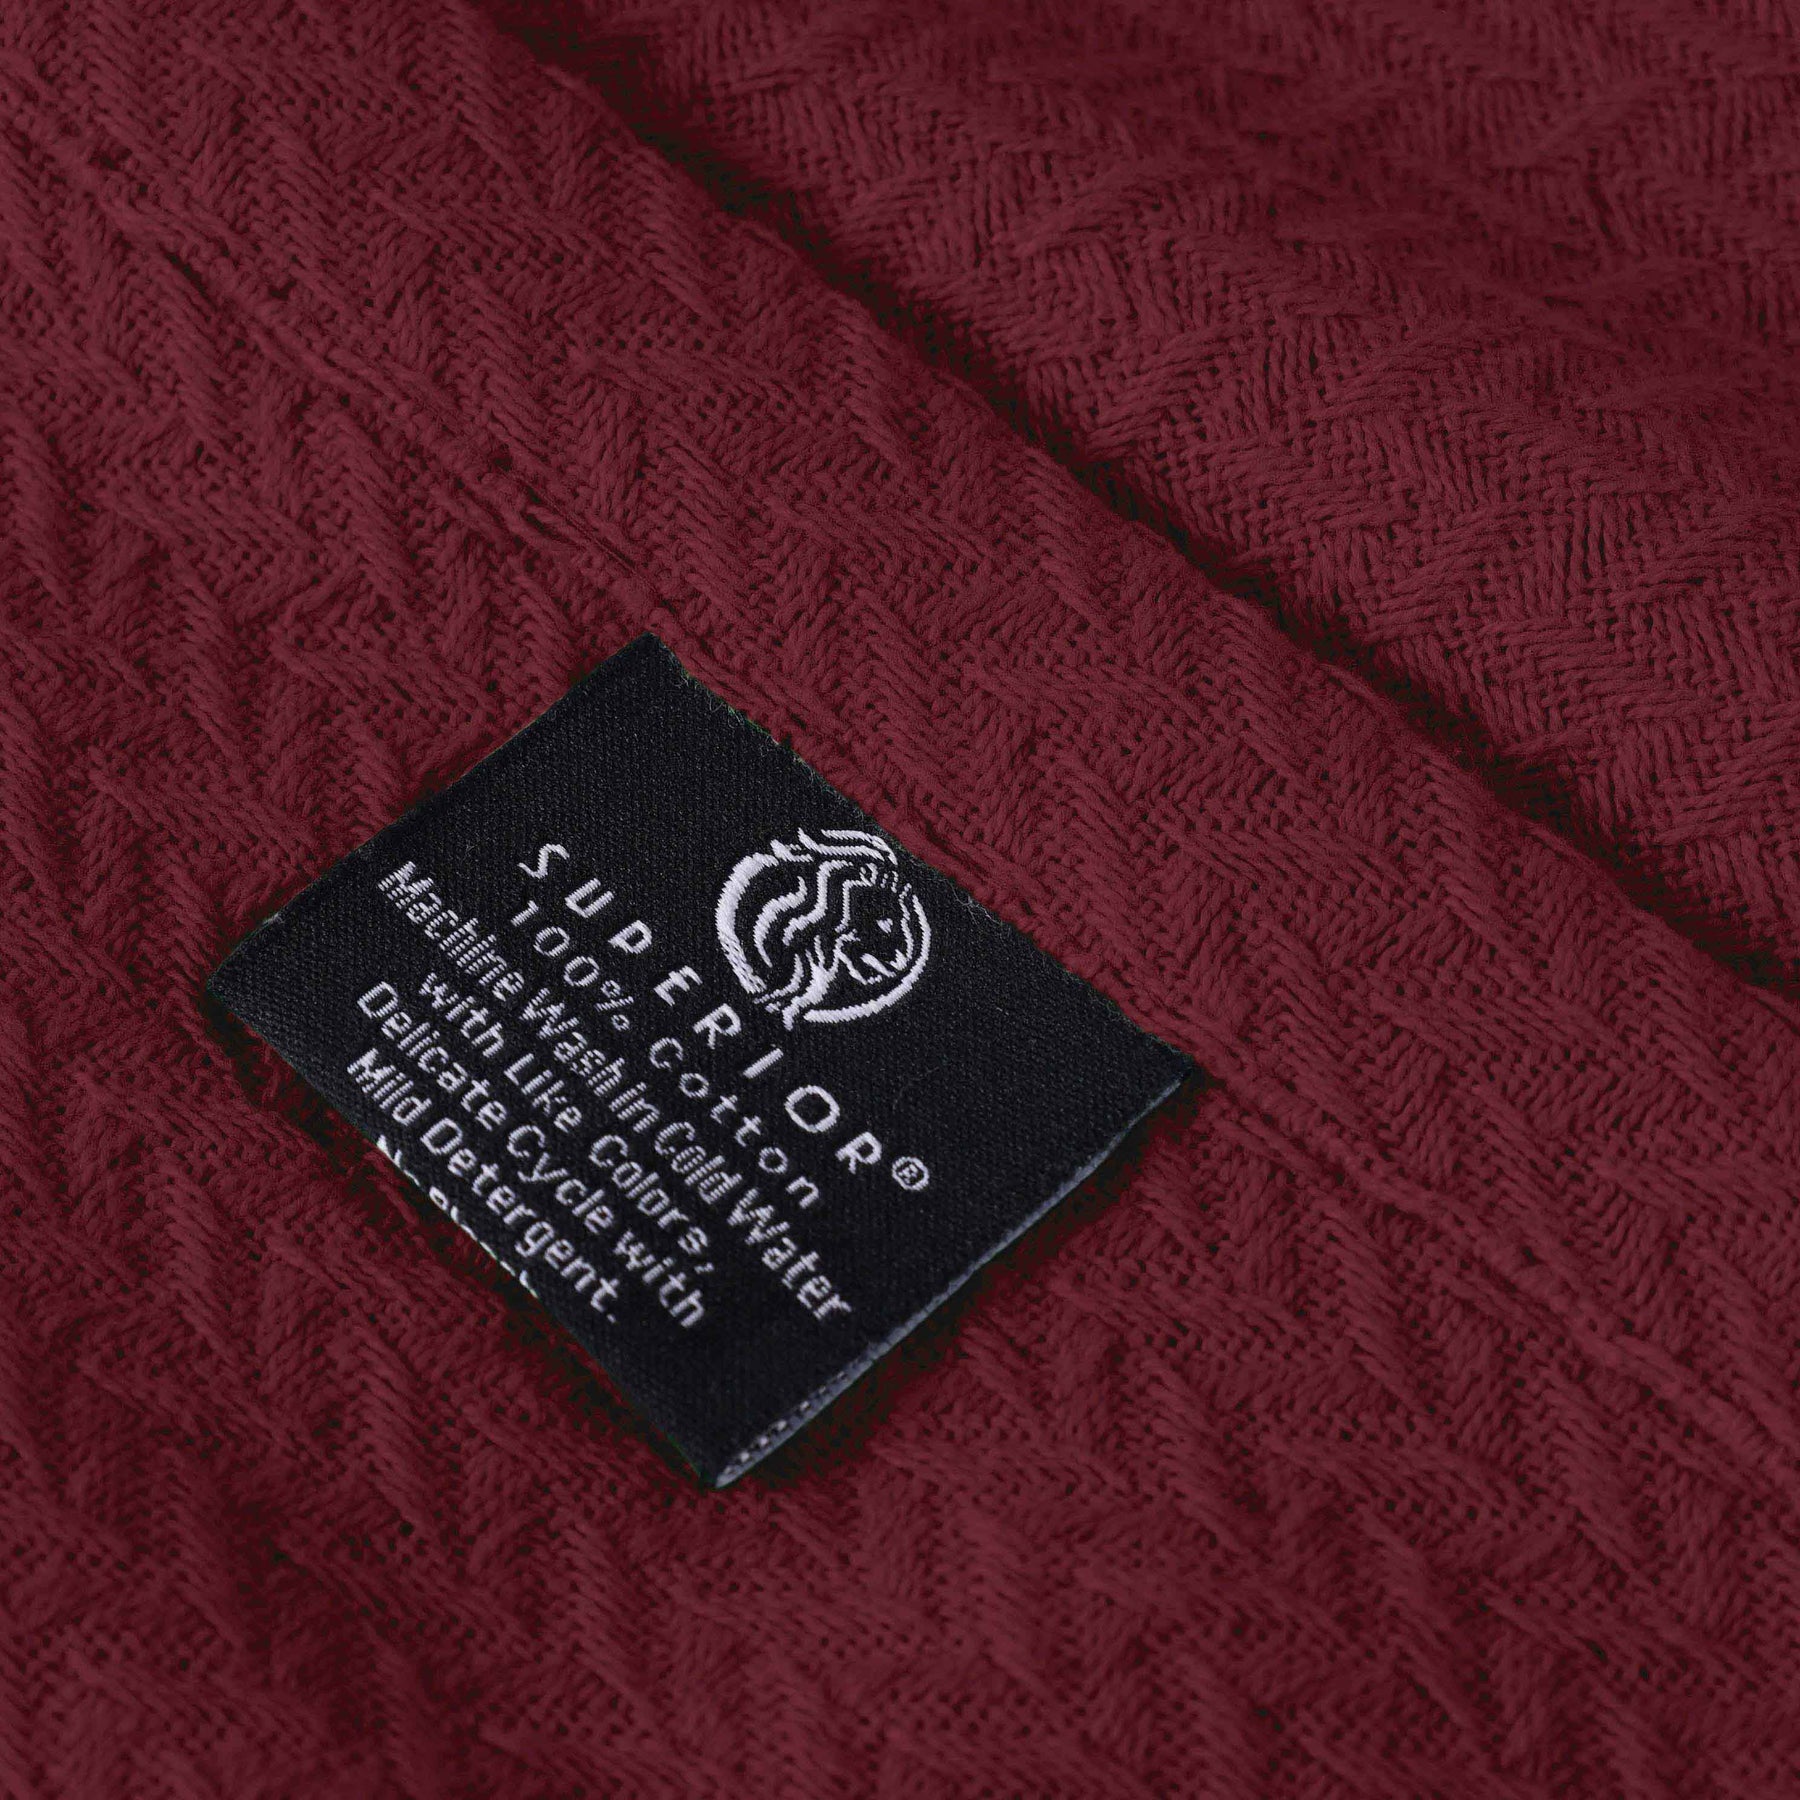 Nobel Cotton Textured Jacquard Chevron Lightweight Woven Blanket - Burgundy